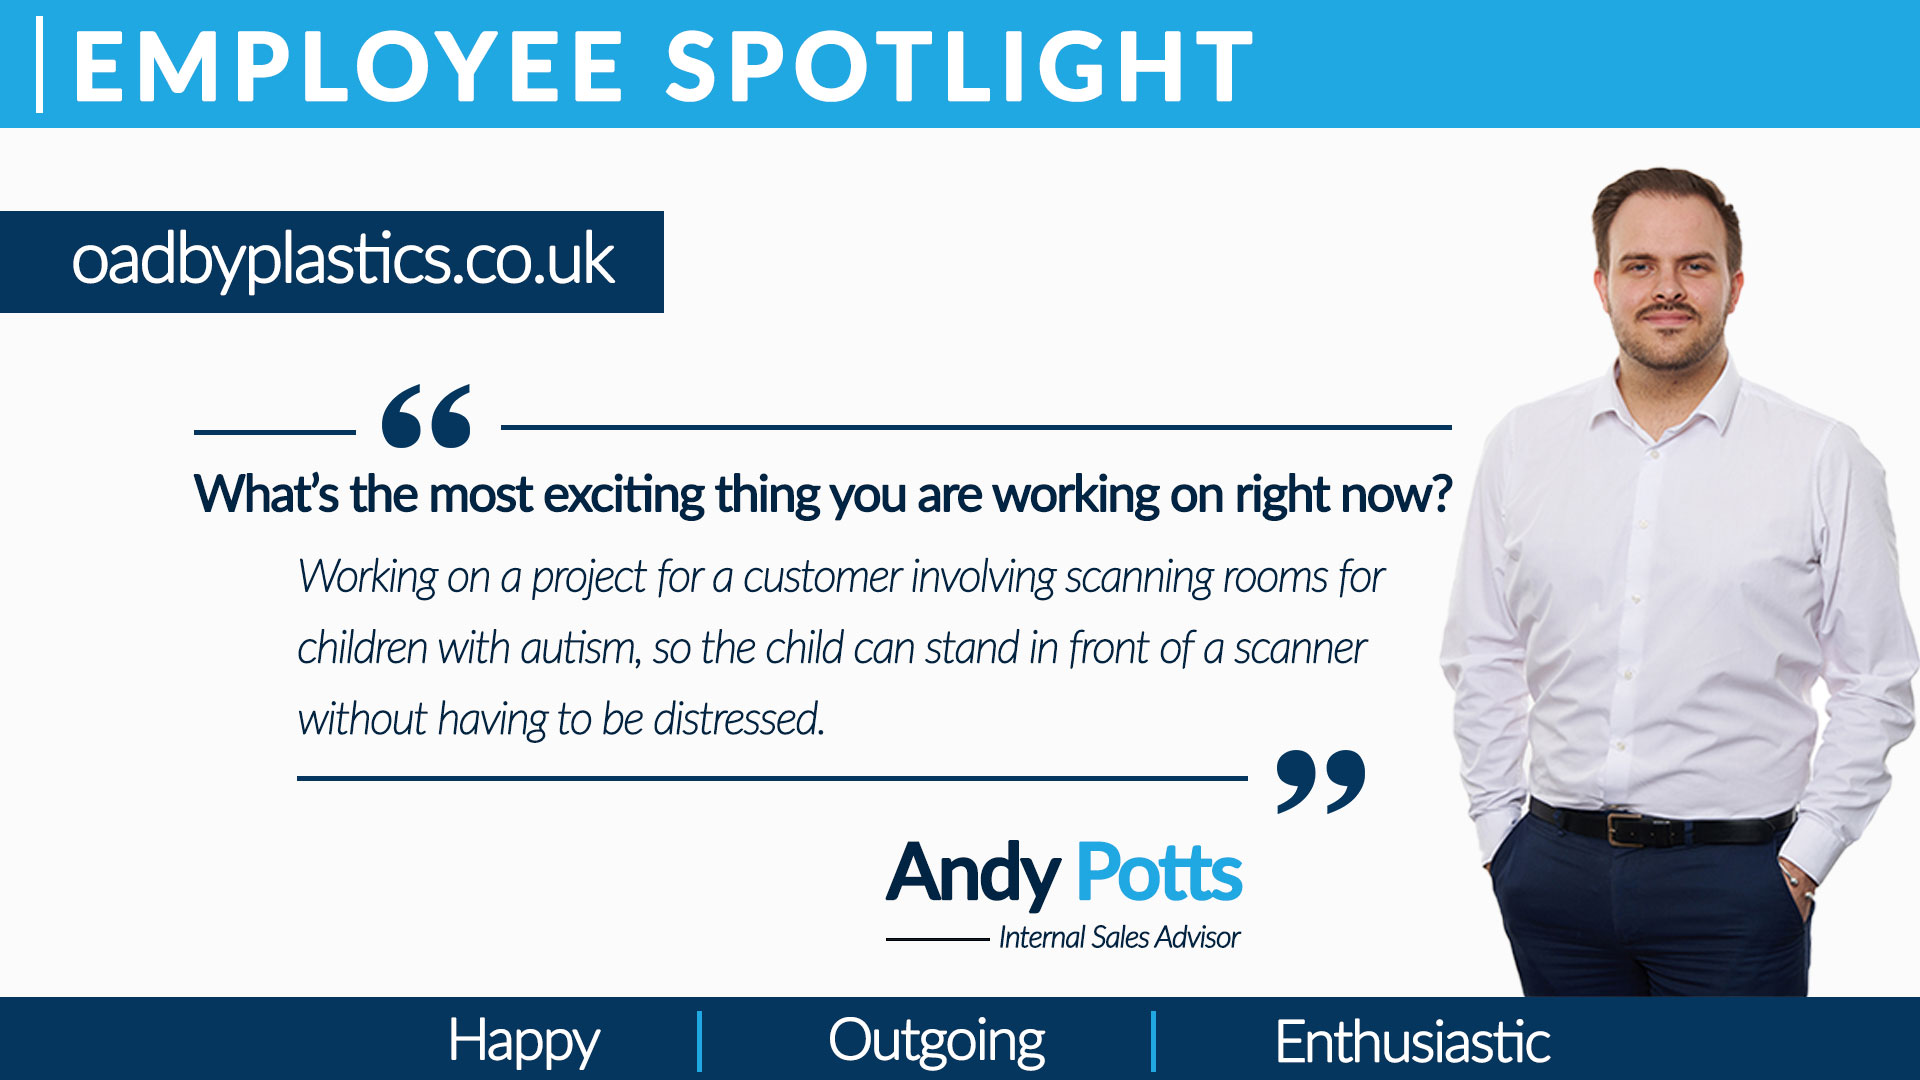 Employee Spotlight - Andy Potts